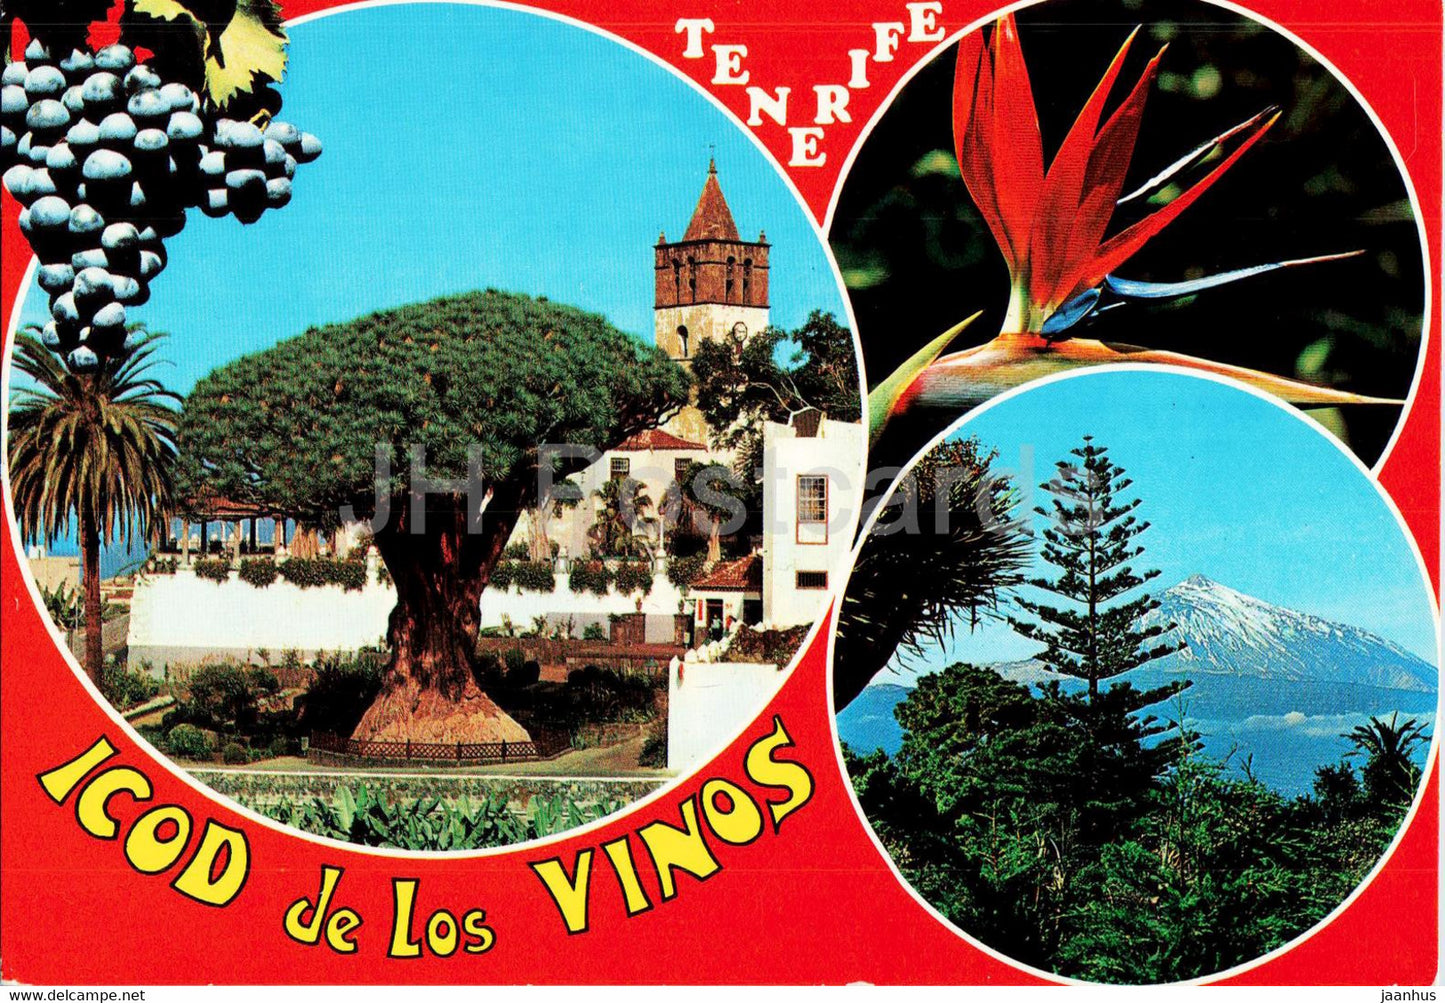 Icod de los Vinos - Tenerife - Spain - unused - JH Postcards